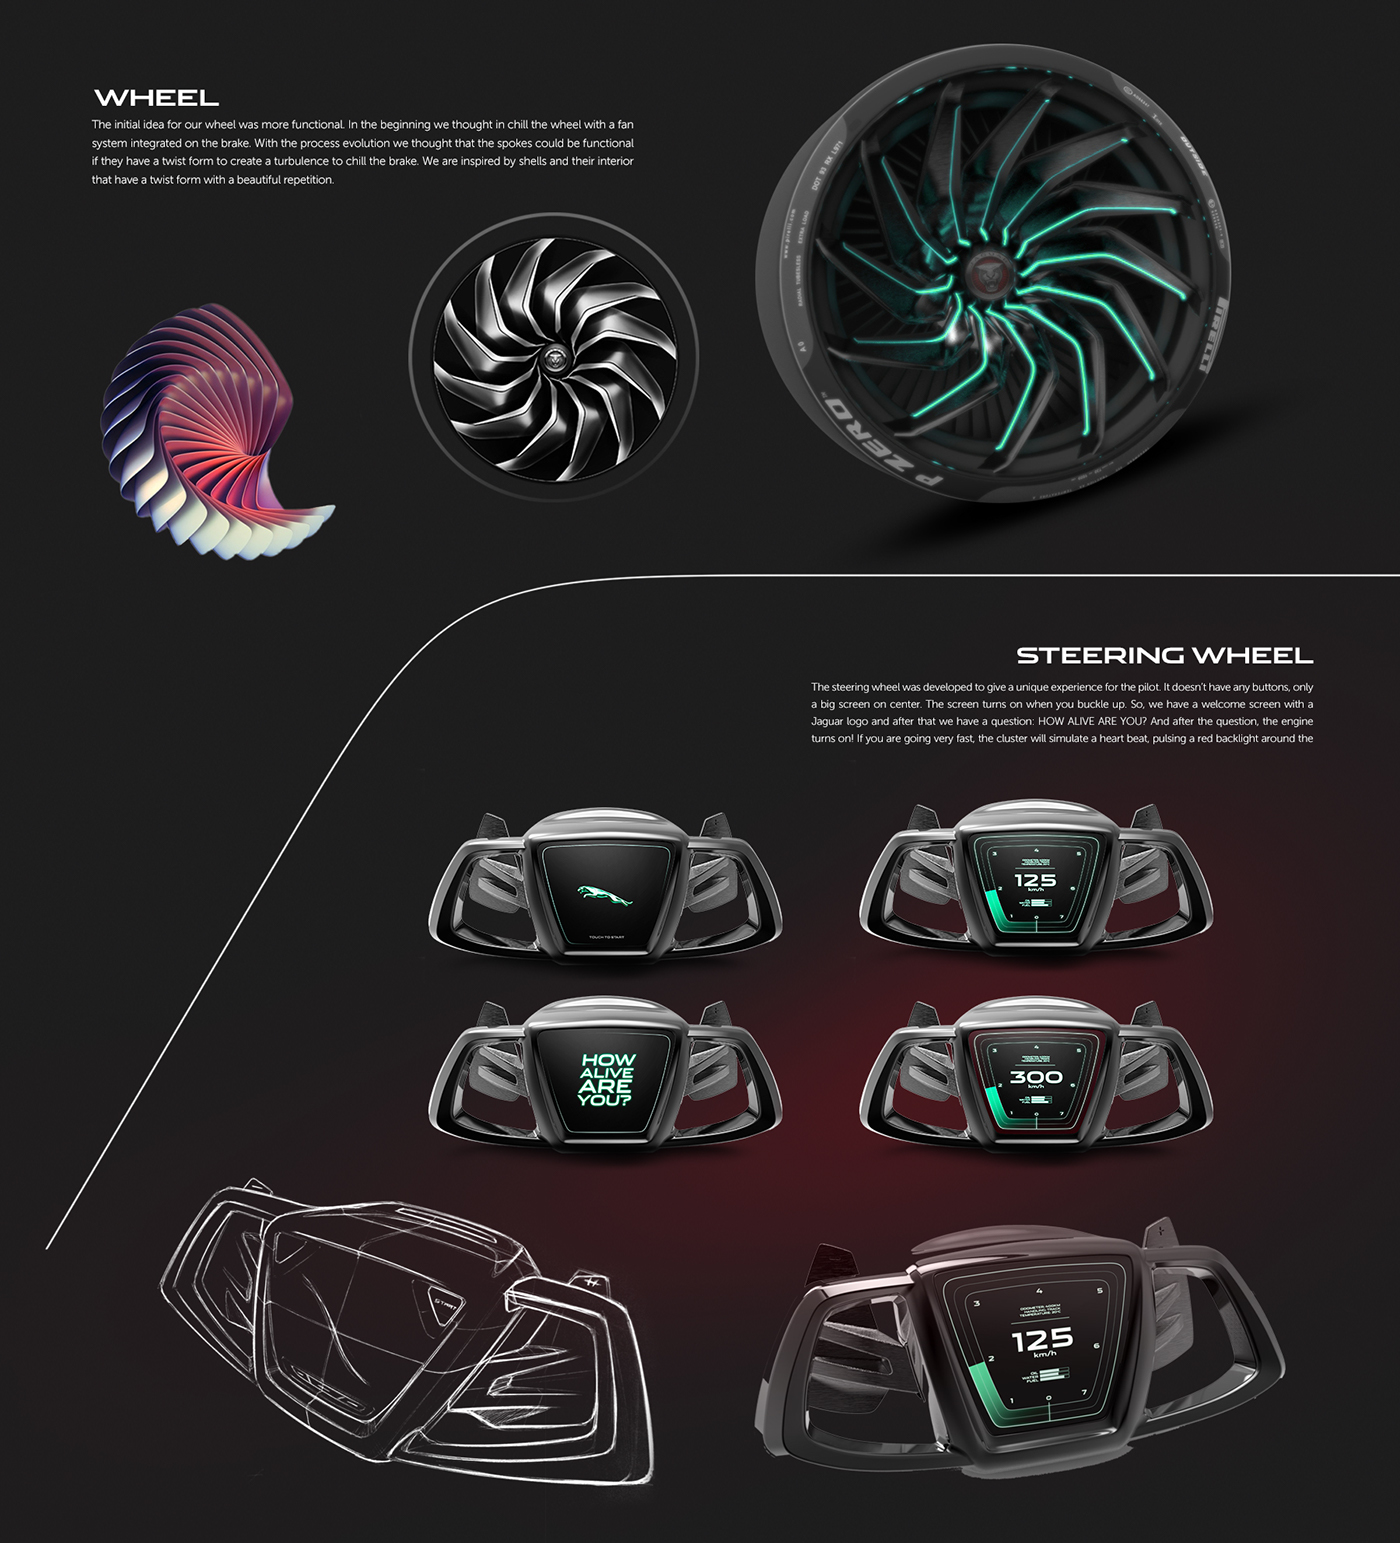 Adobe Portfolio jaguar VisionGT granturismo conceptcar transportationdesign cardesign